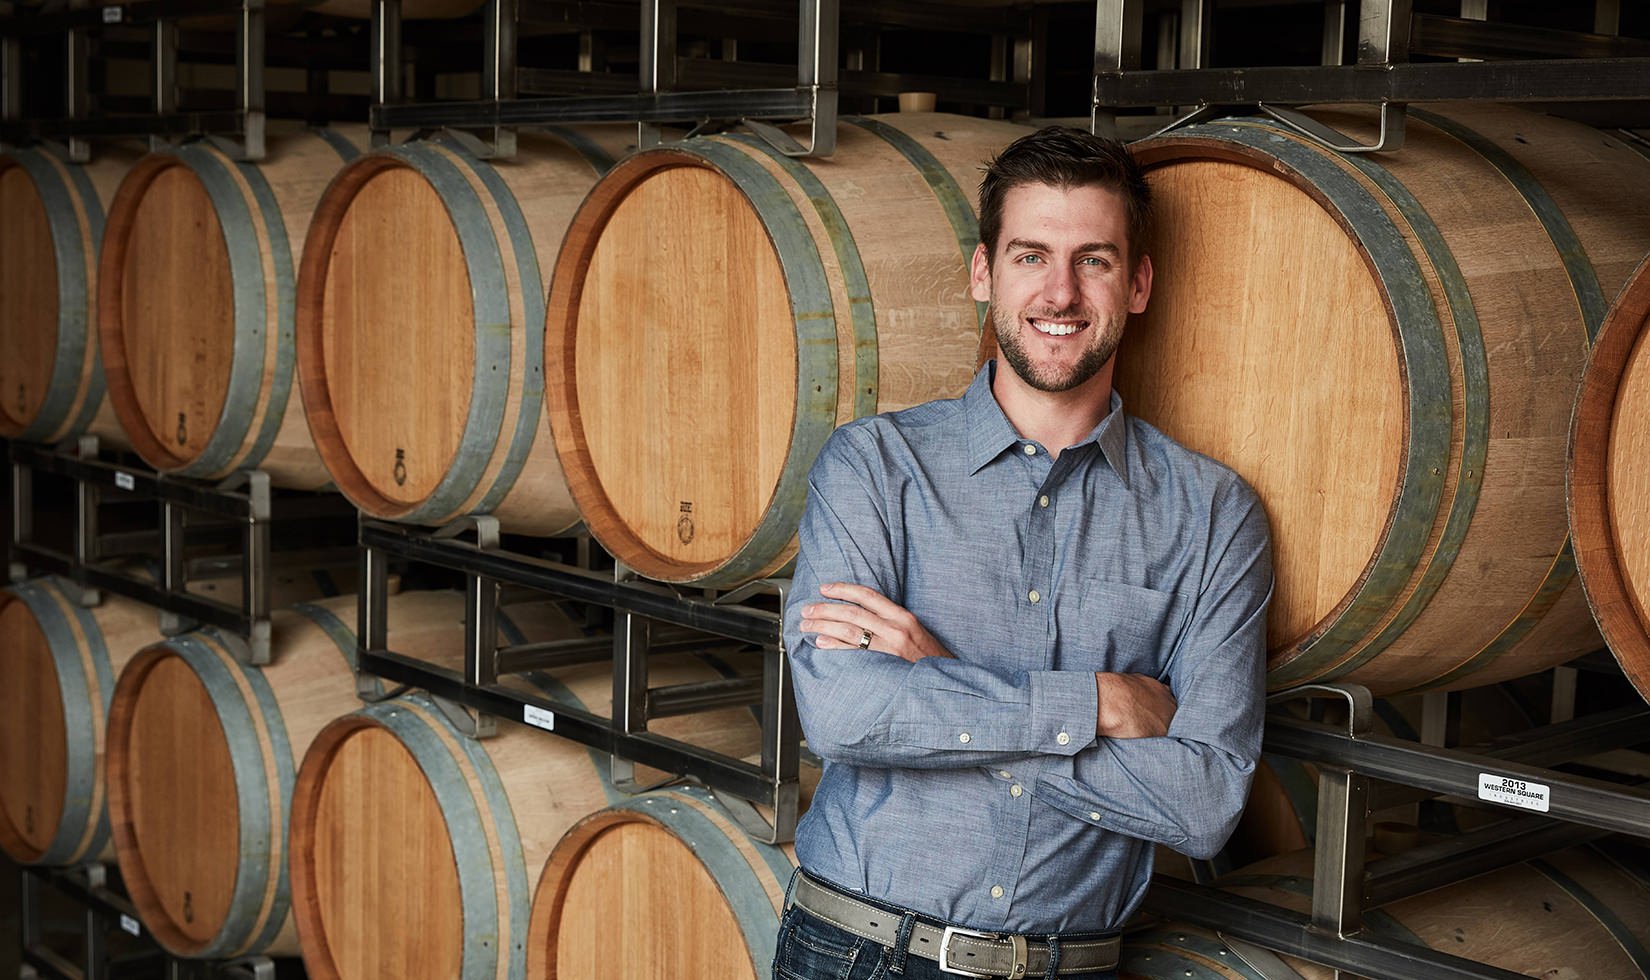 Meet John Duckett Assistant Winemaker For Jordan Winery